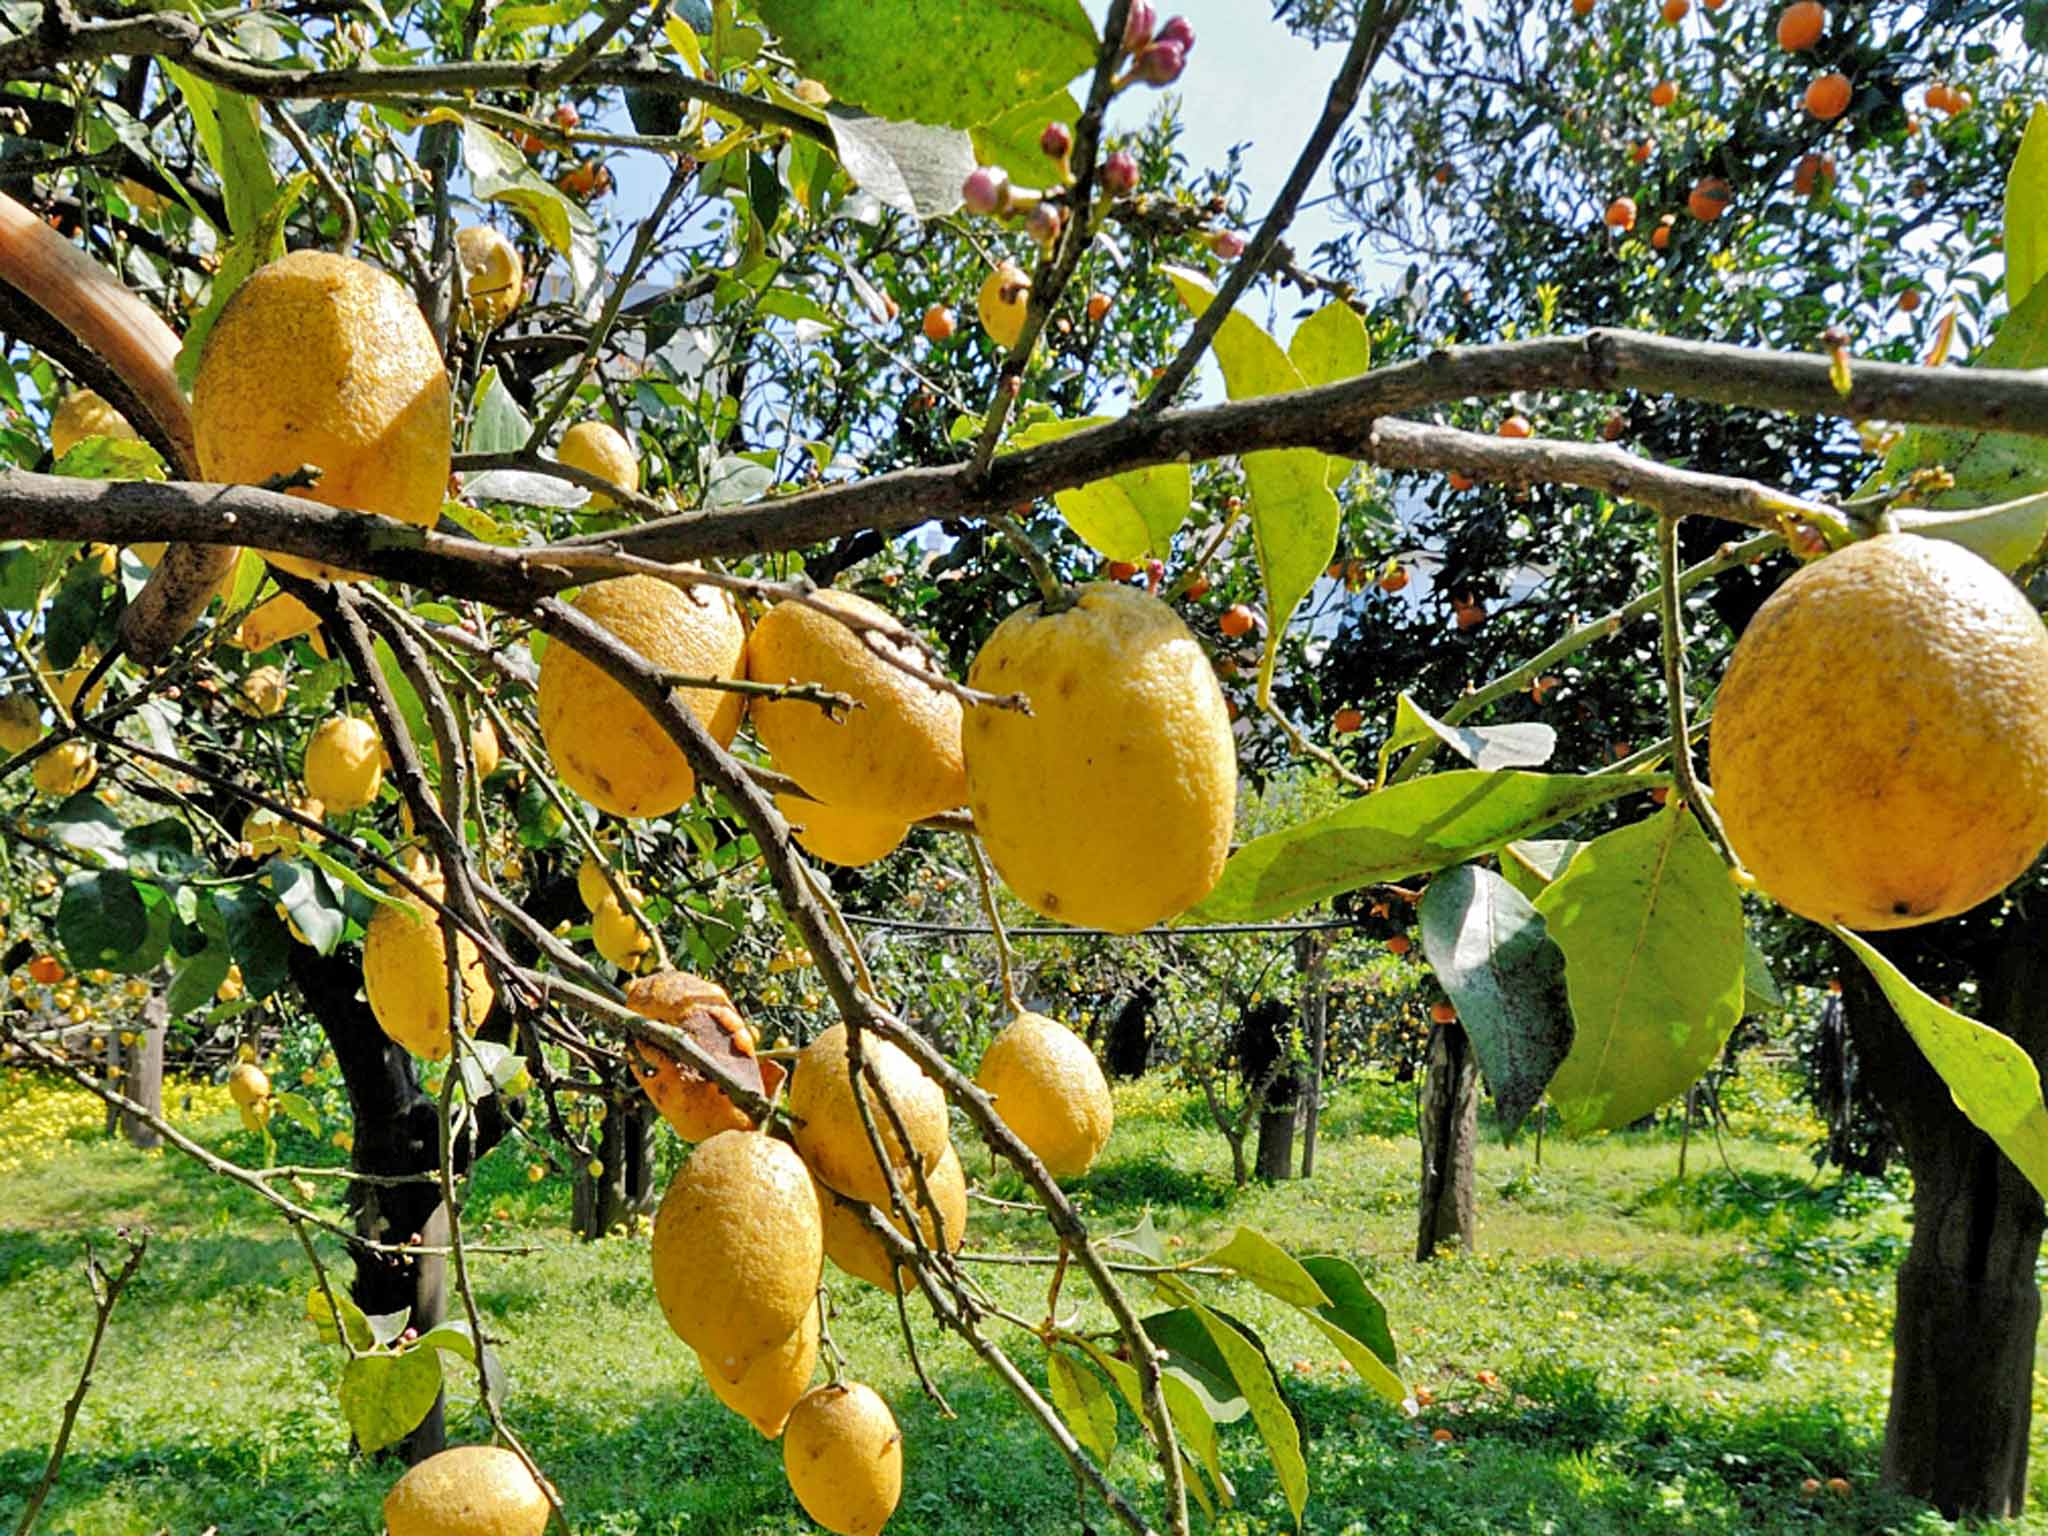 Zest for life: lemons growing on a farm near Sorrento, Italy